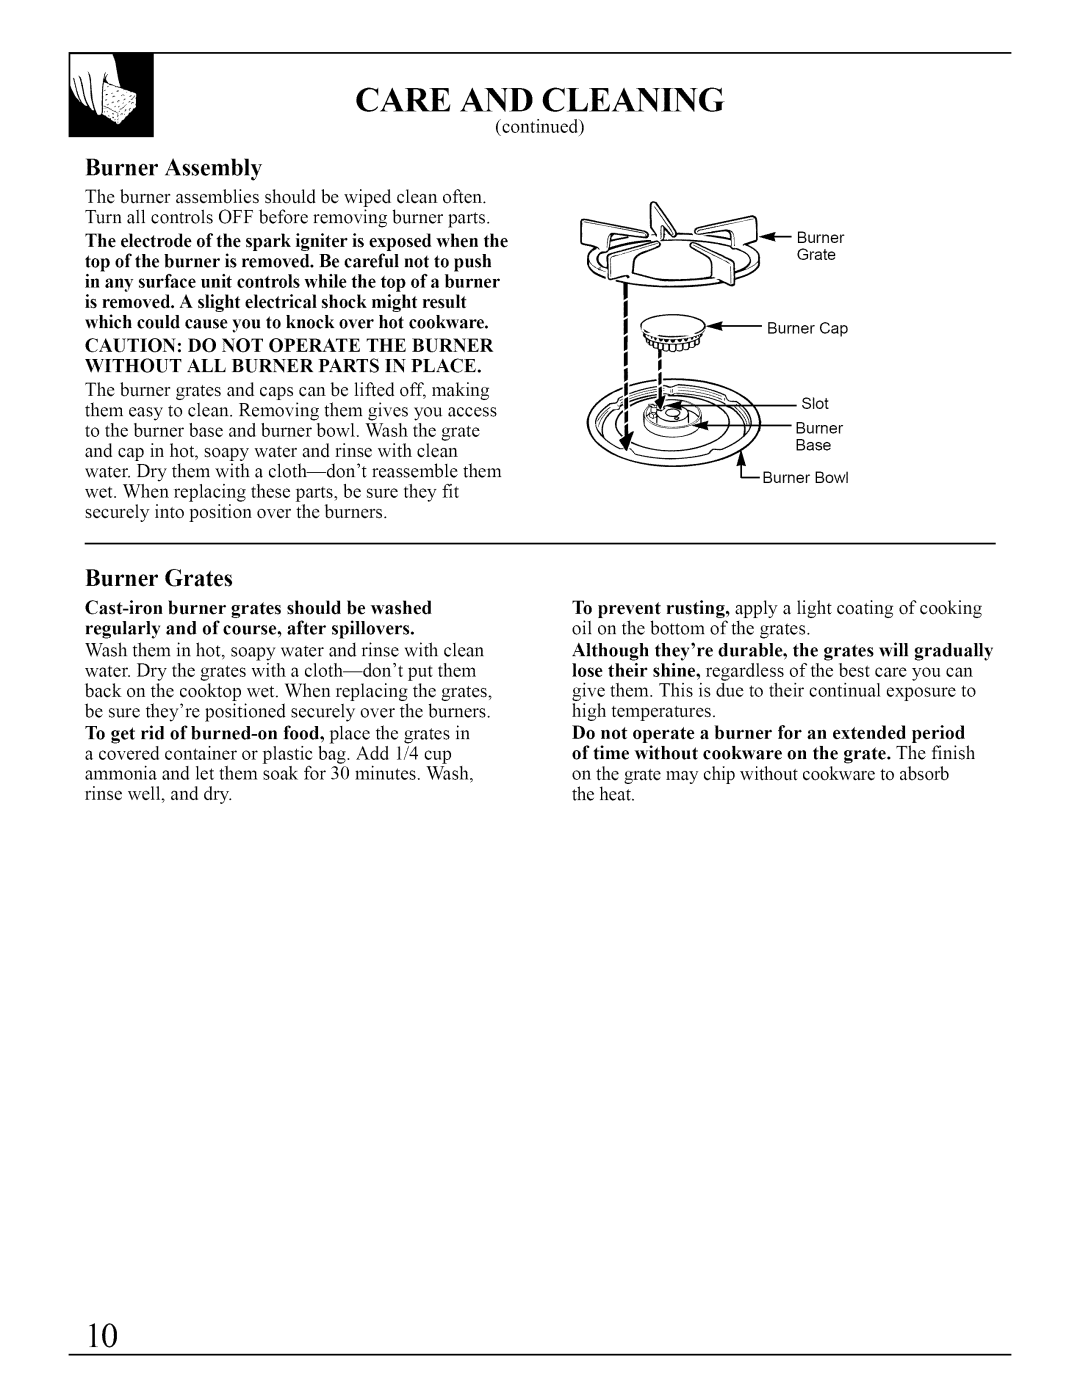 Bosch Appliances JGP641, JGP640 installation instructions Burner Assembly, Burner Grates, s,ot, Care And Cleaning 